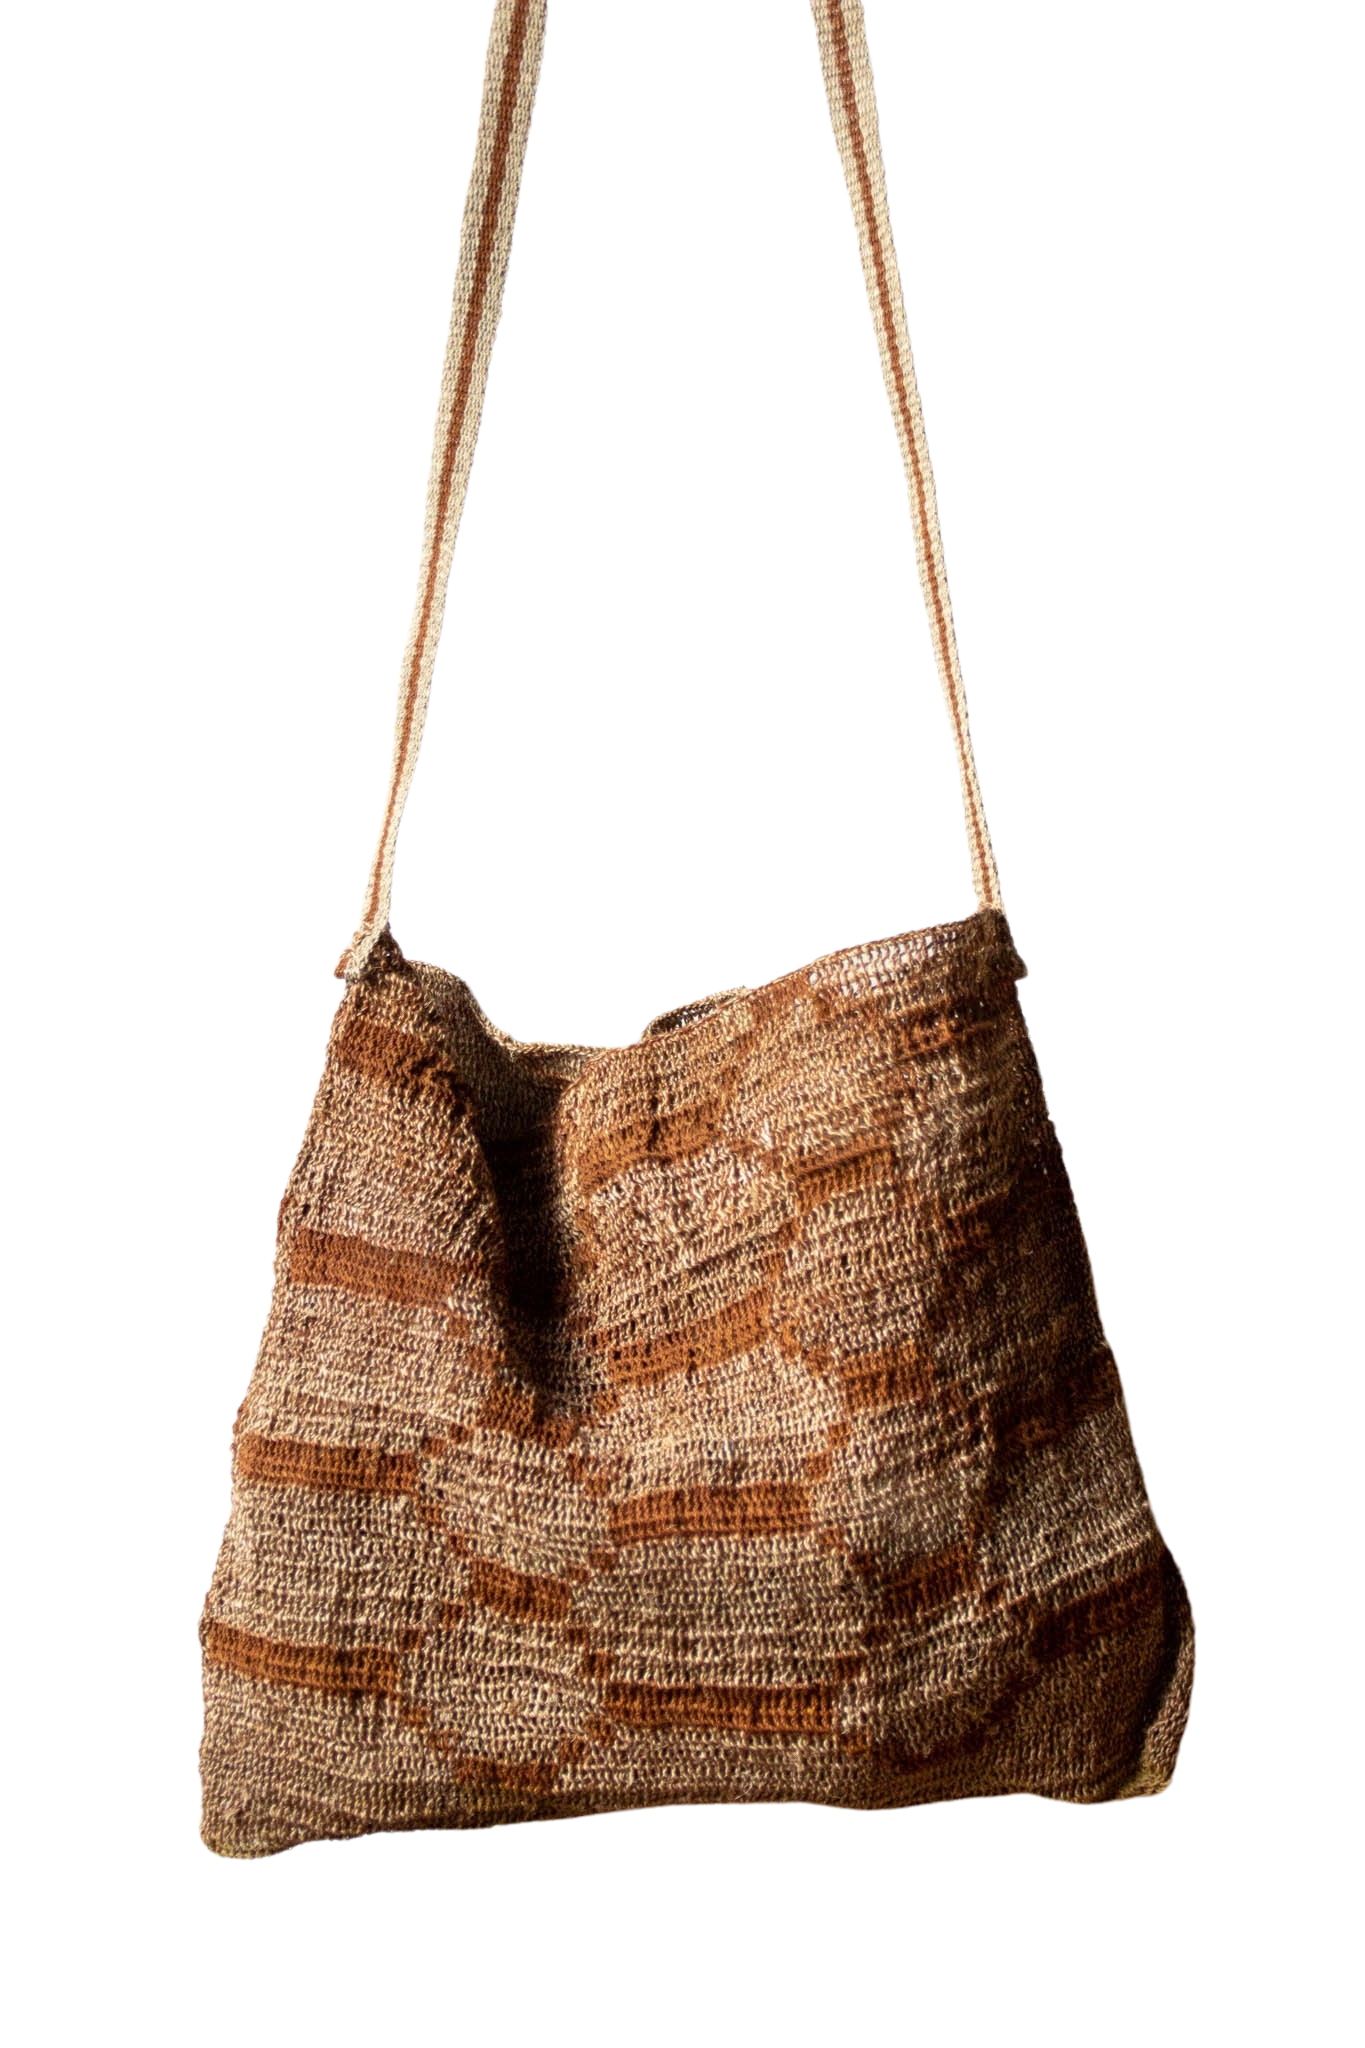 Wichí Tusca Bag of chaguar fiber 